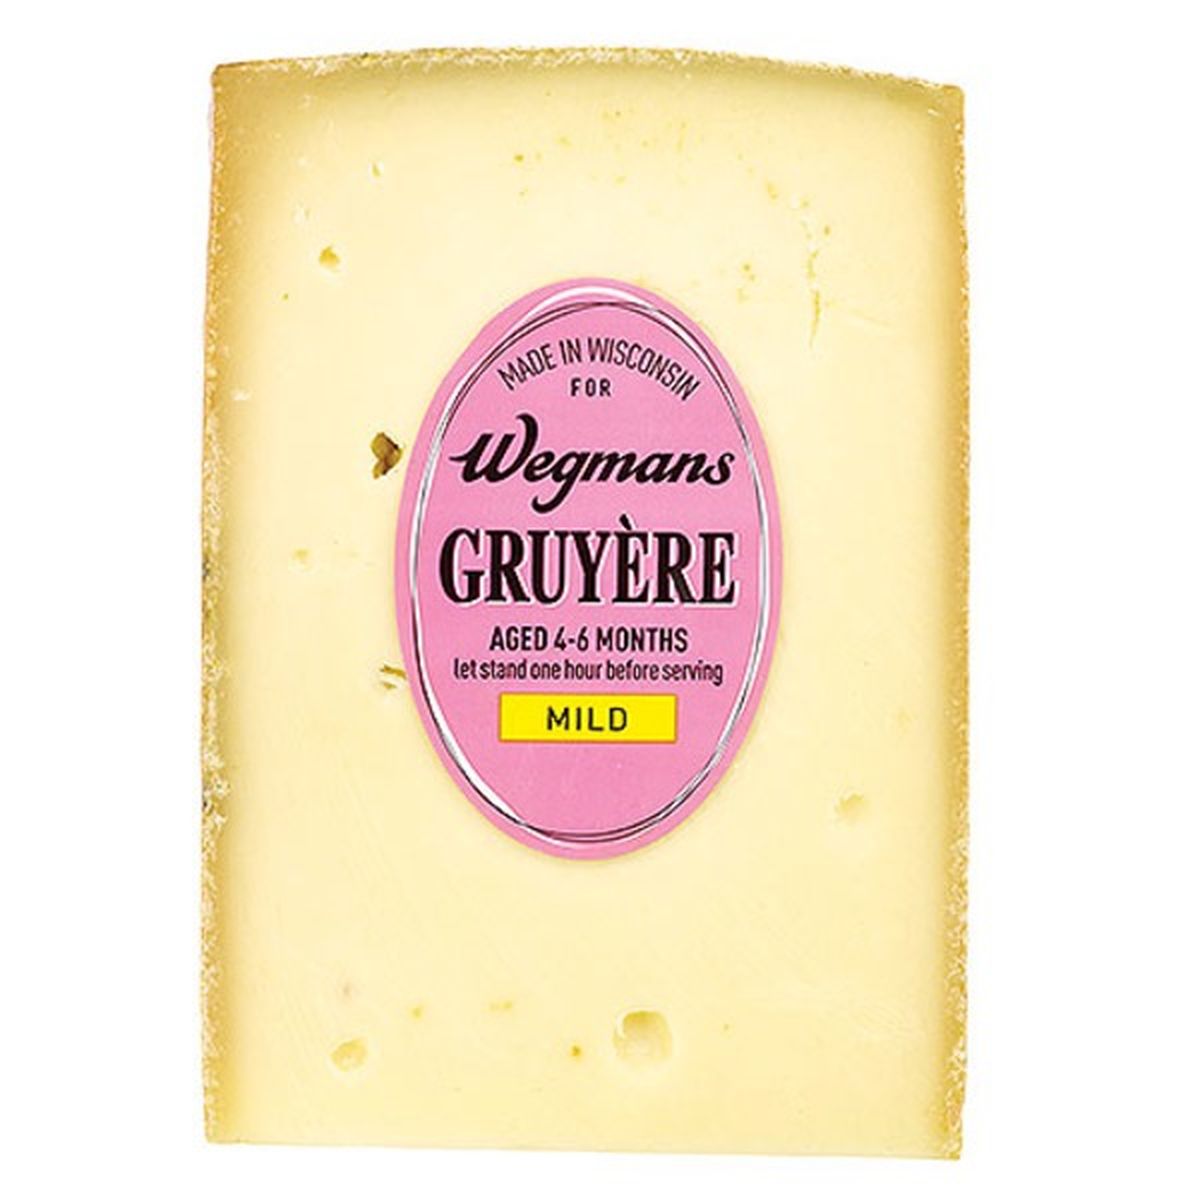 Calories in Wegmans Mild Gruyere Swiss Cheese